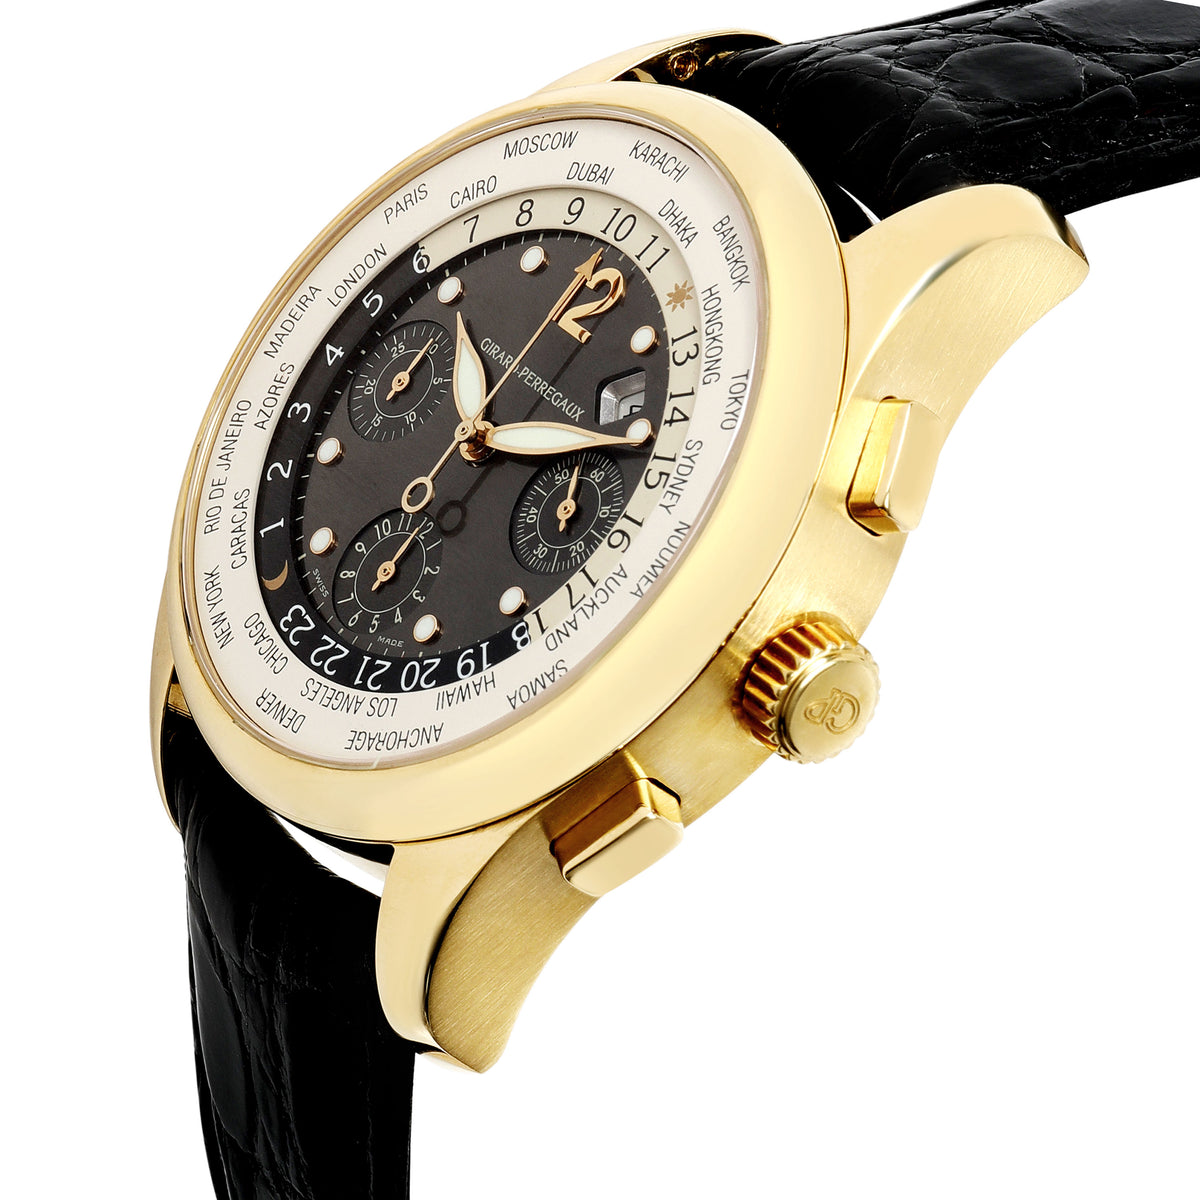 Girard Perregaux WW.TC Traveller 4980 Men's Watch in 18kt Yellow Gold